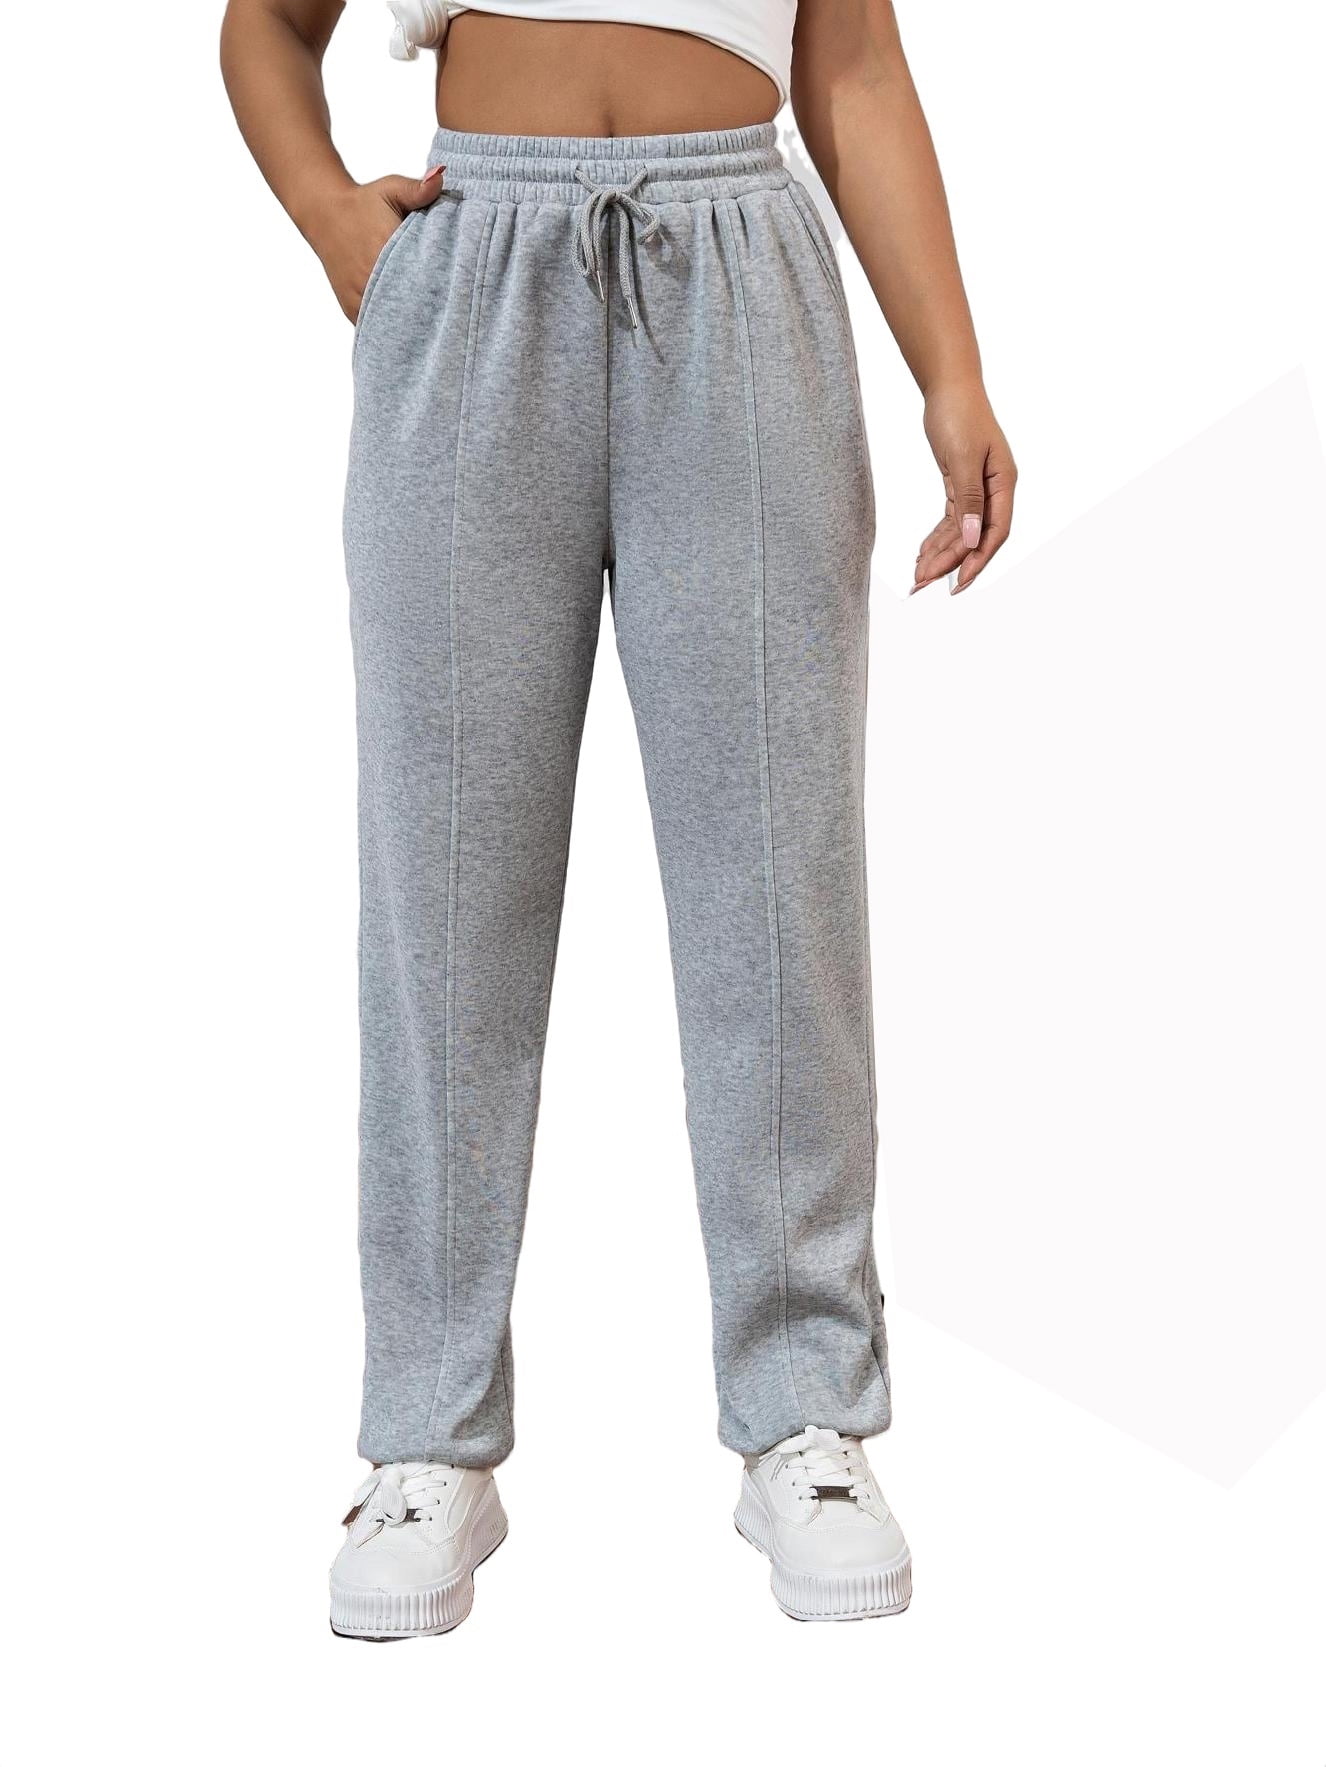  GWNWTT Women's Sweatpants Slant Pocket Drawstring Sweatpants  Sweatpants (Color : Gray, Size : Medium) : Clothing, Shoes & Jewelry